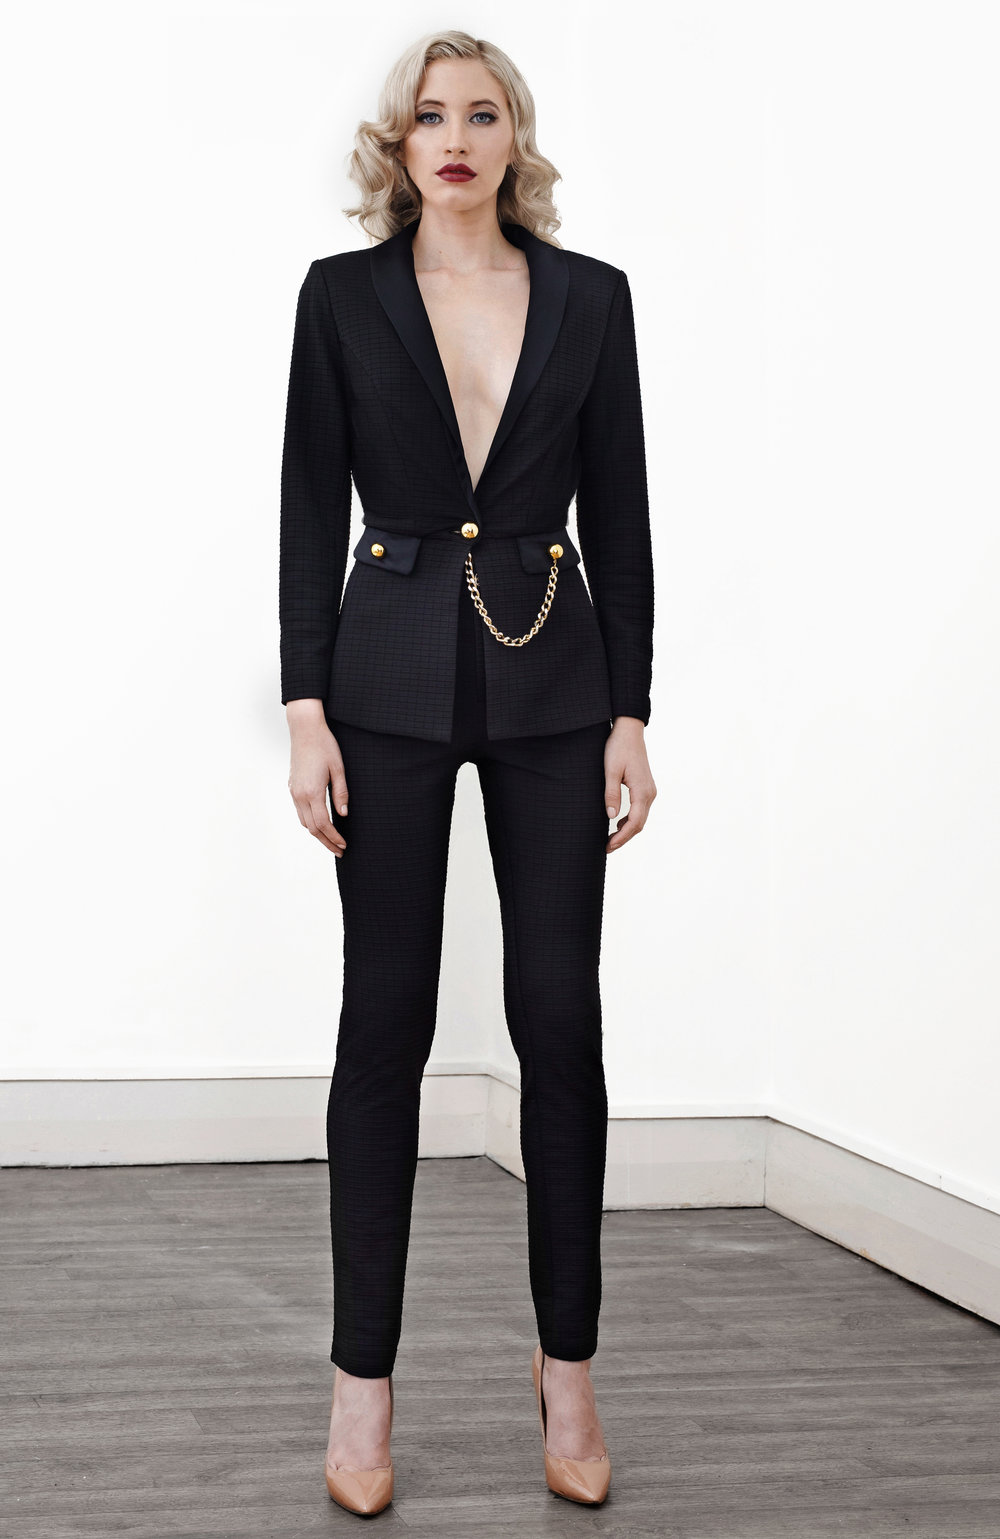 Lexi+Clothing+-+Plantinum+Fashion+Agency+suit+lb.jpg